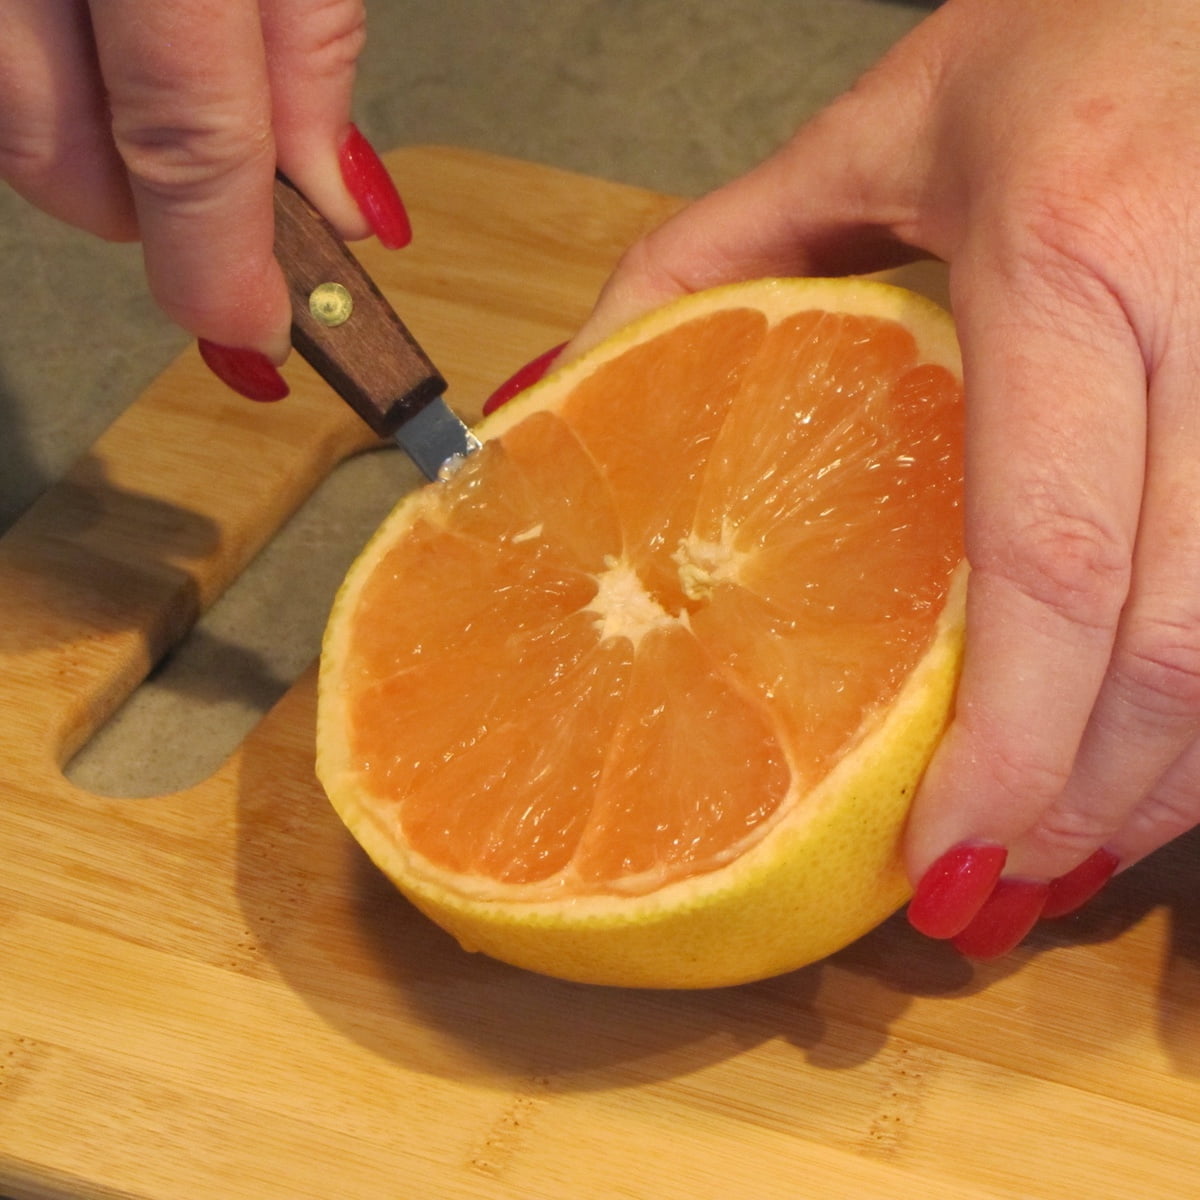 Fun Kitchen® Grapefruit Knife - Gourmac